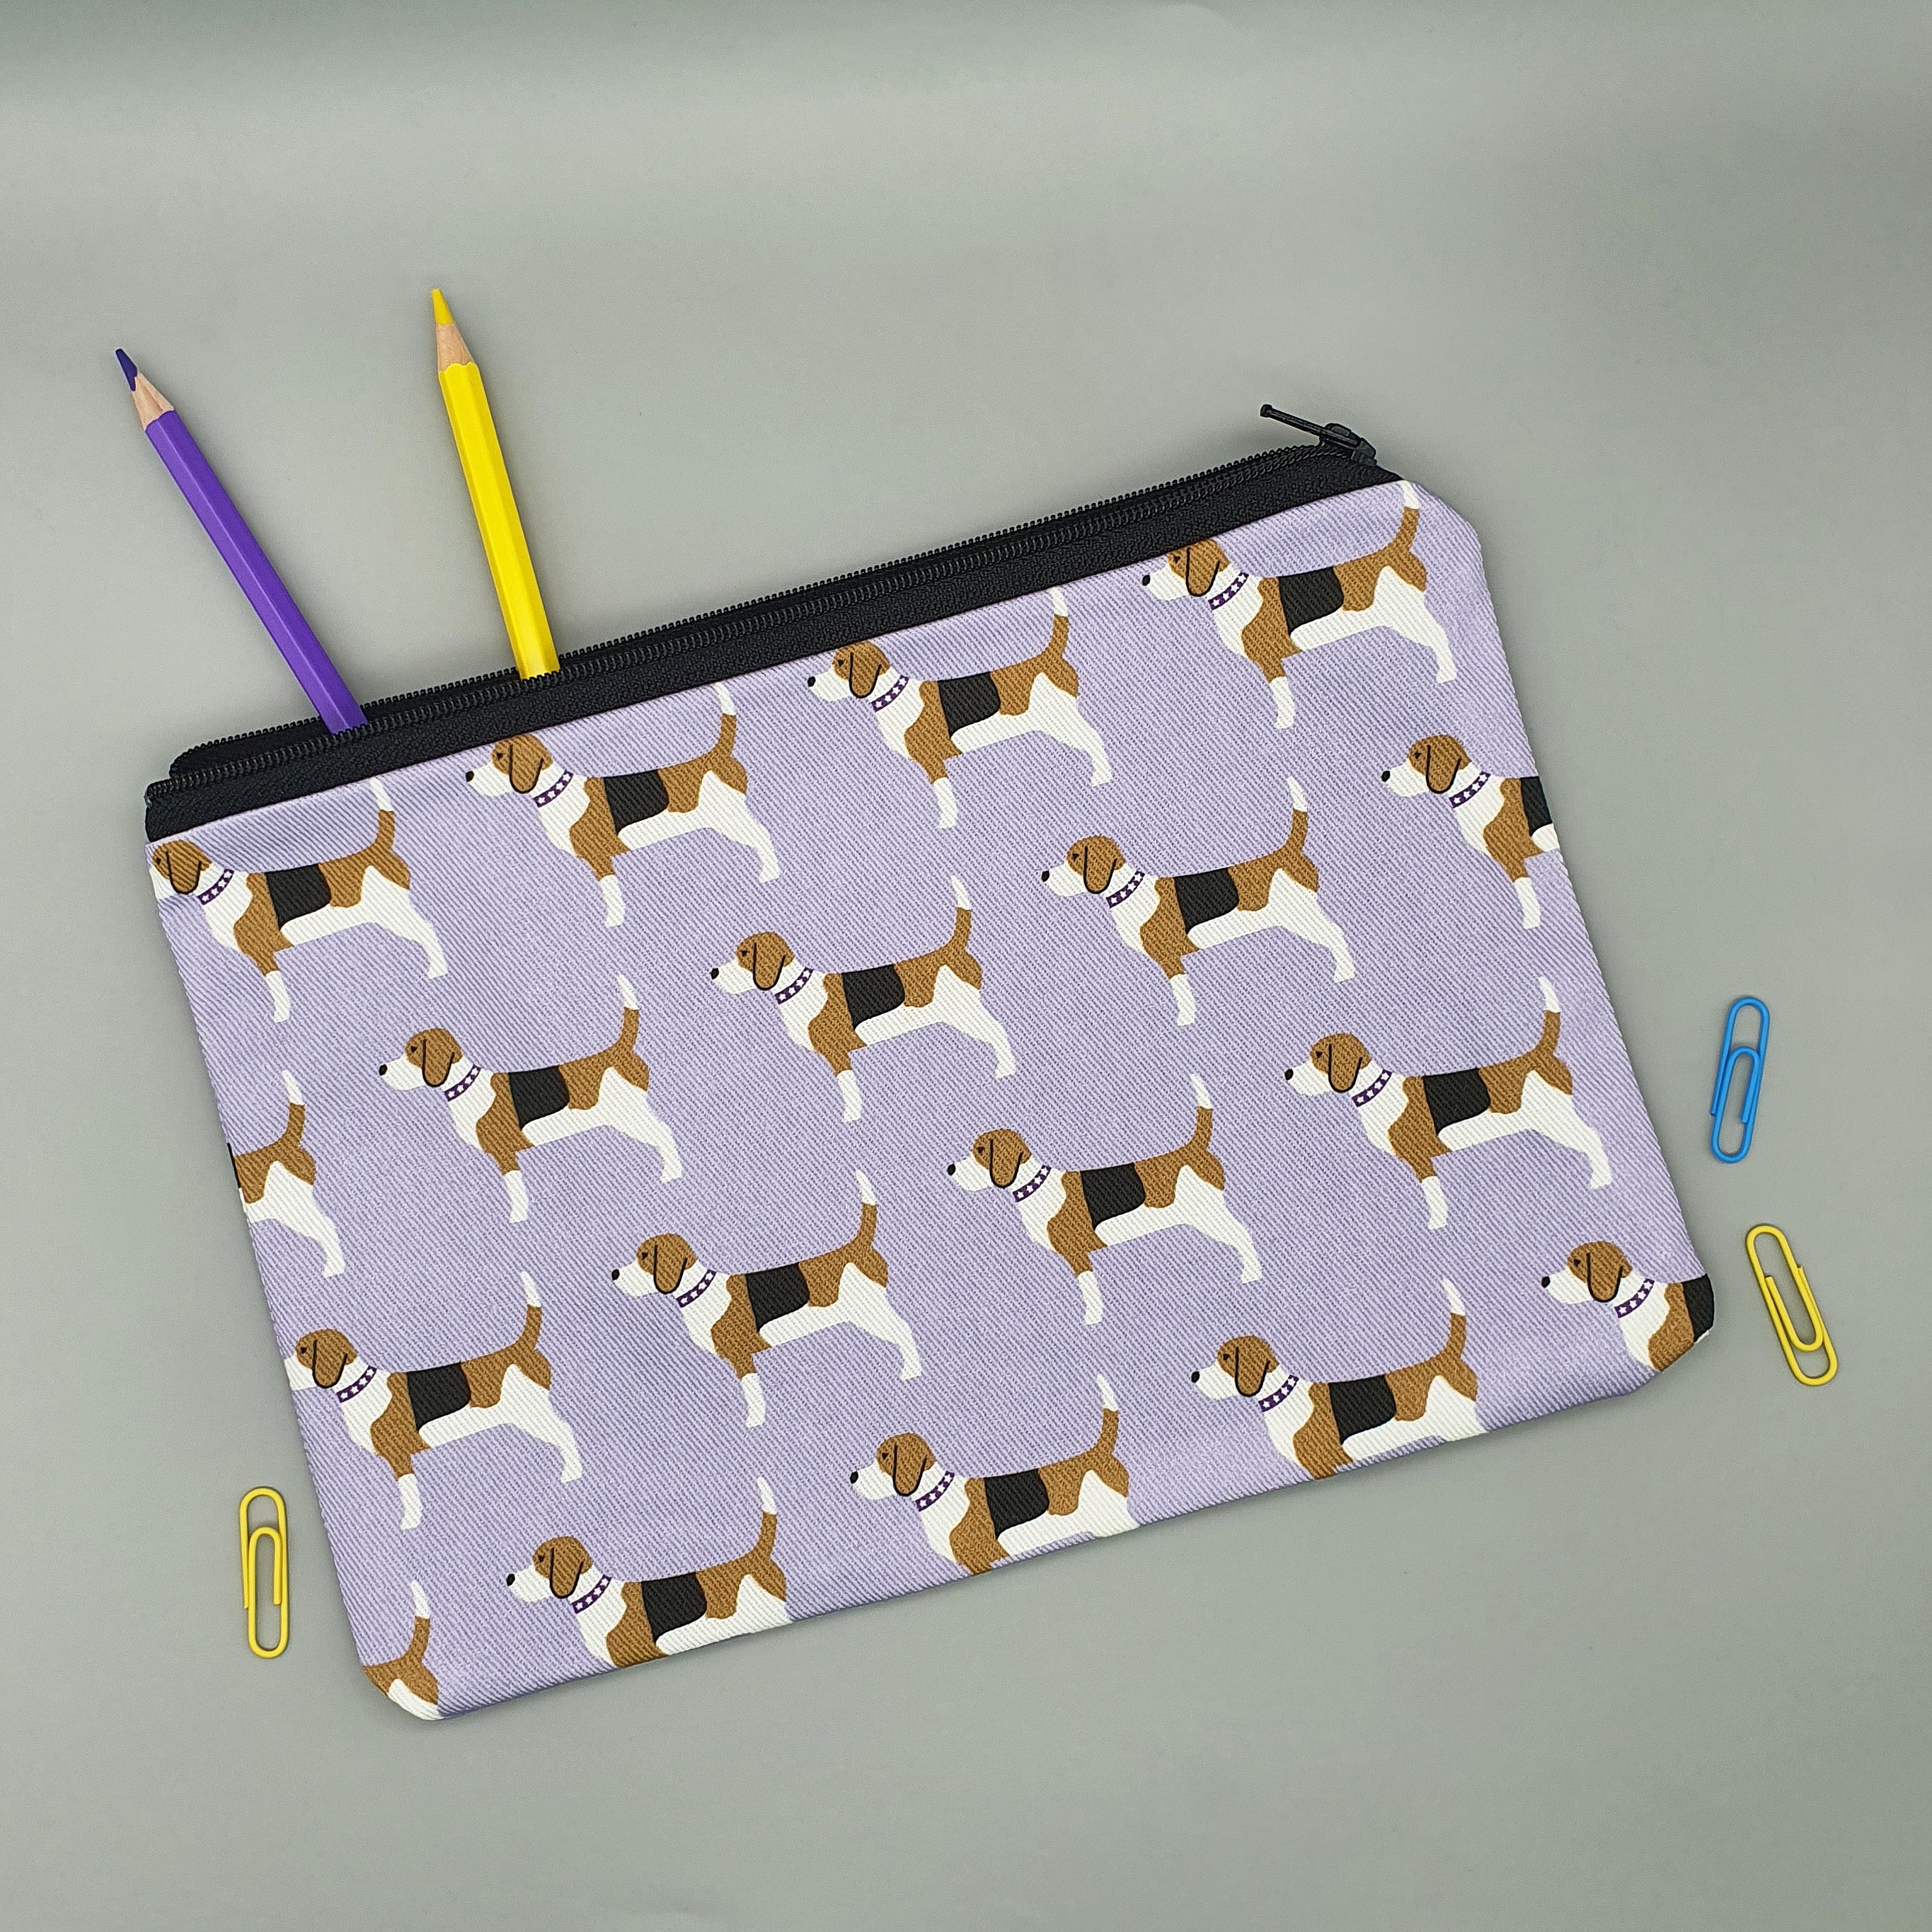 Beagle cotton accessories bag used as pencil case